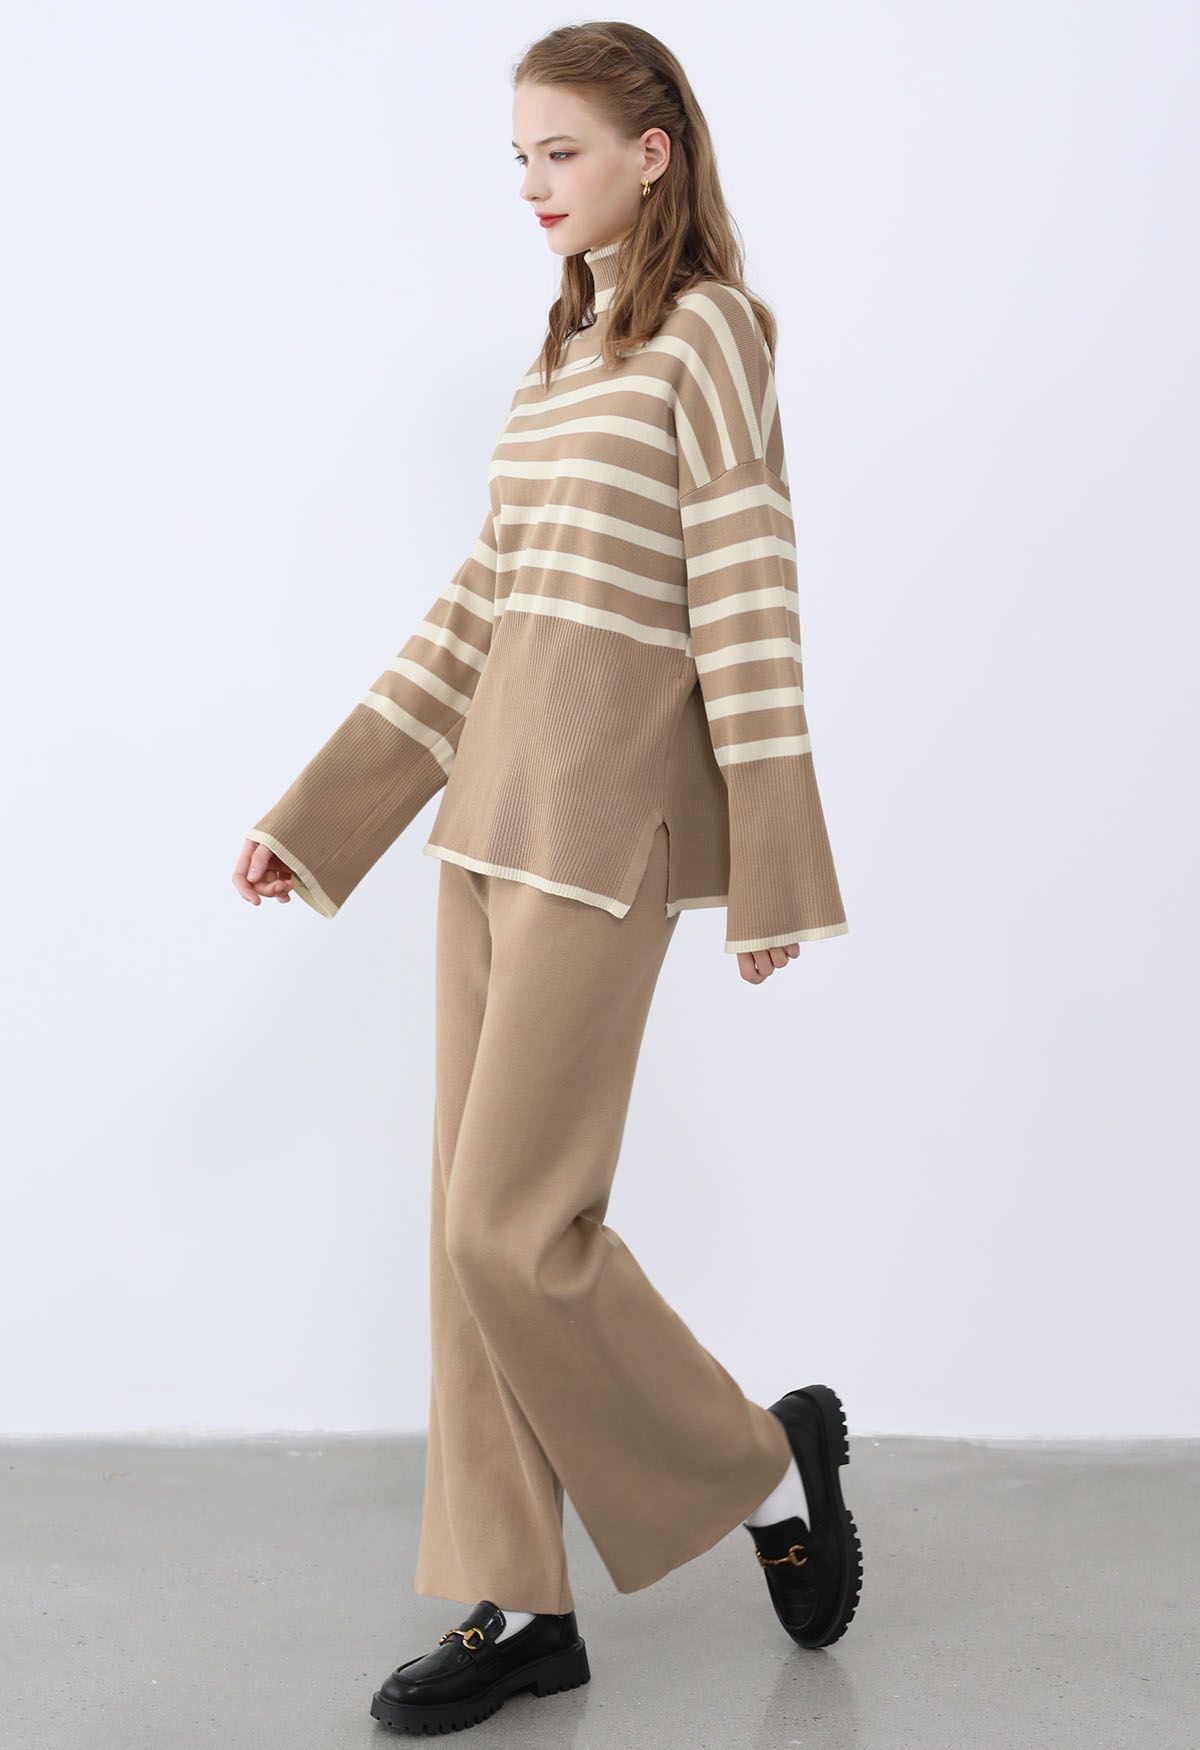 Stripe Turtleneck Knit Sweater and Pants Set in Light Tan